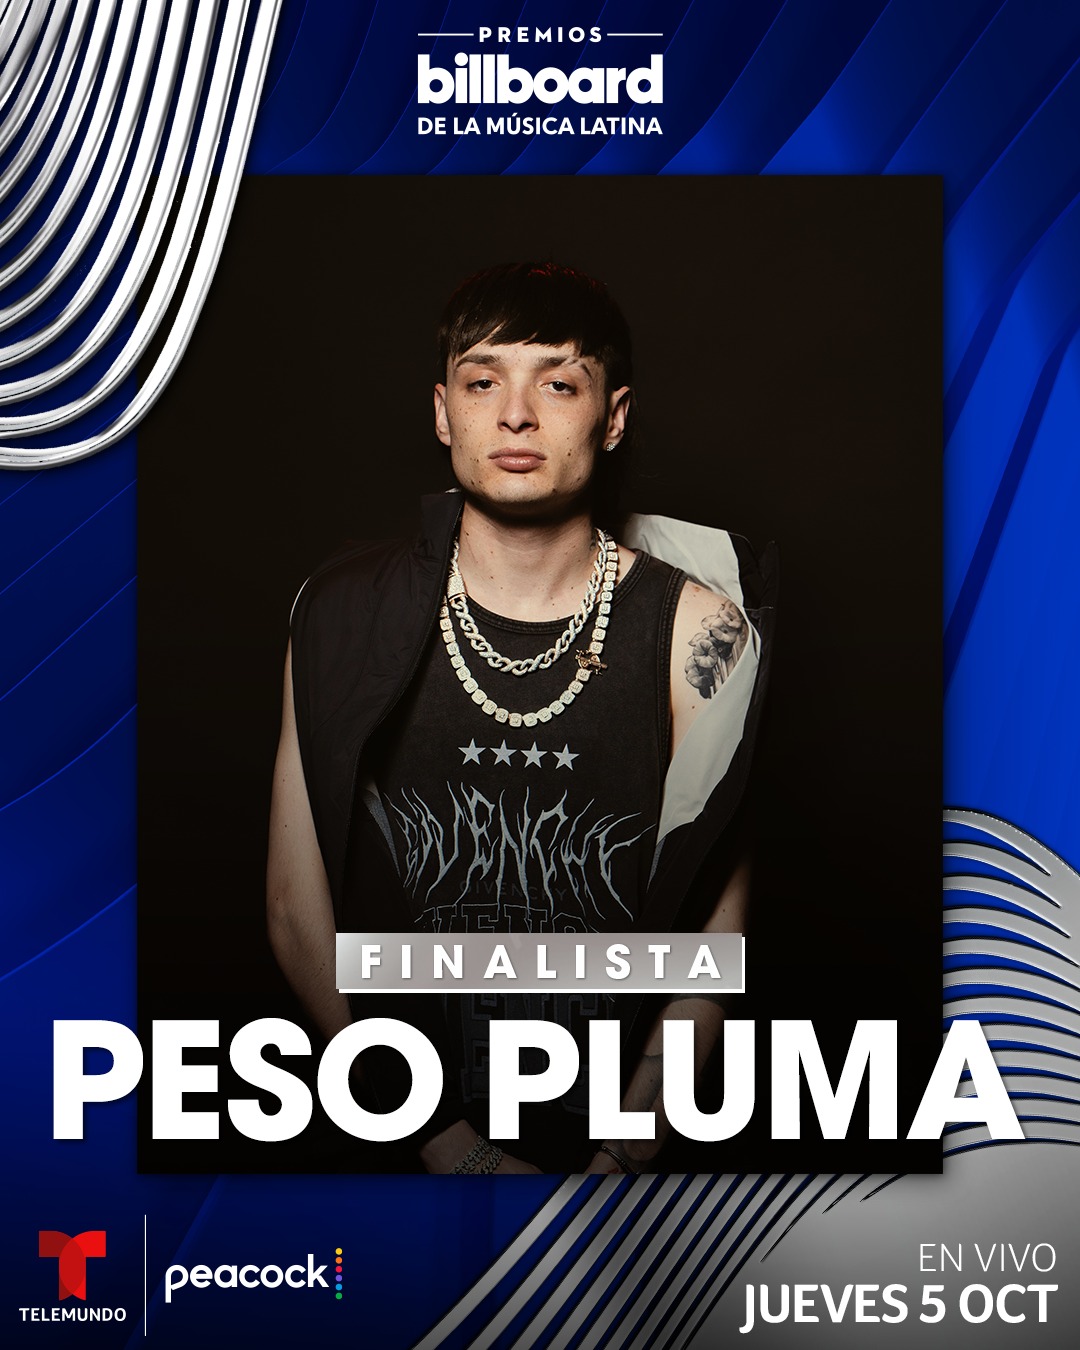 PESO PLUMA anuncia su gira Latinomericana